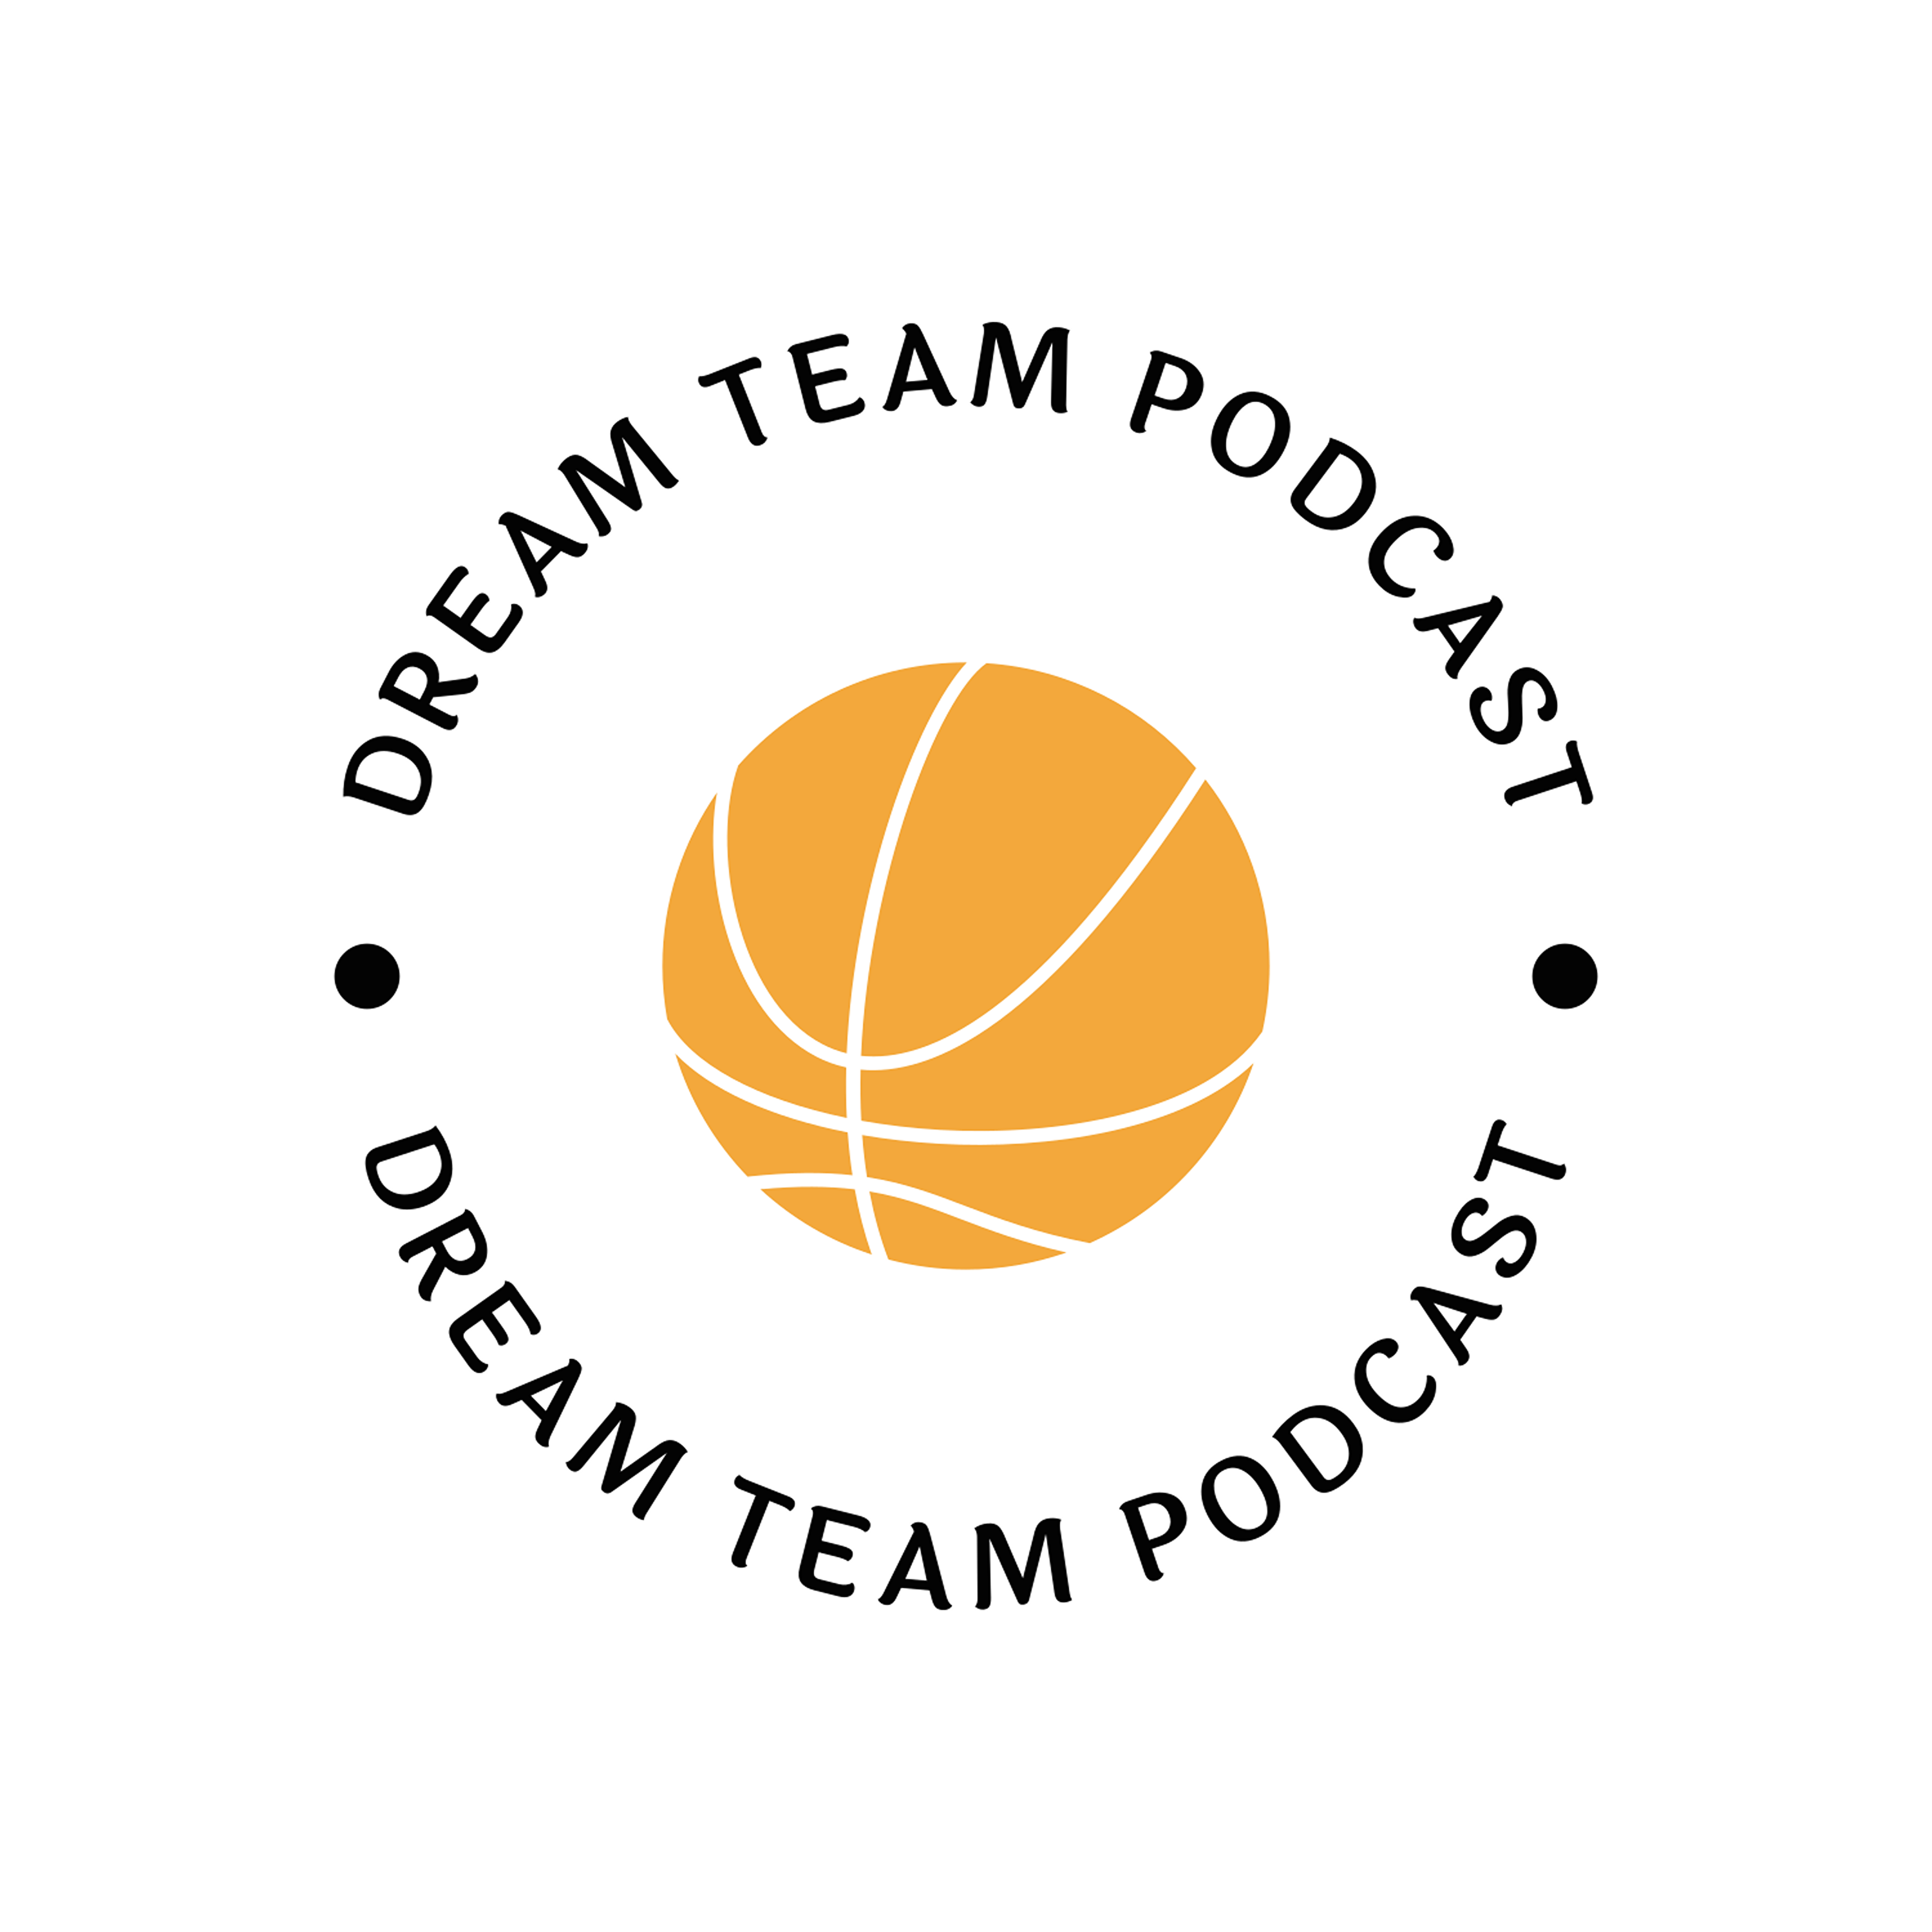 The Dream Team Podcast